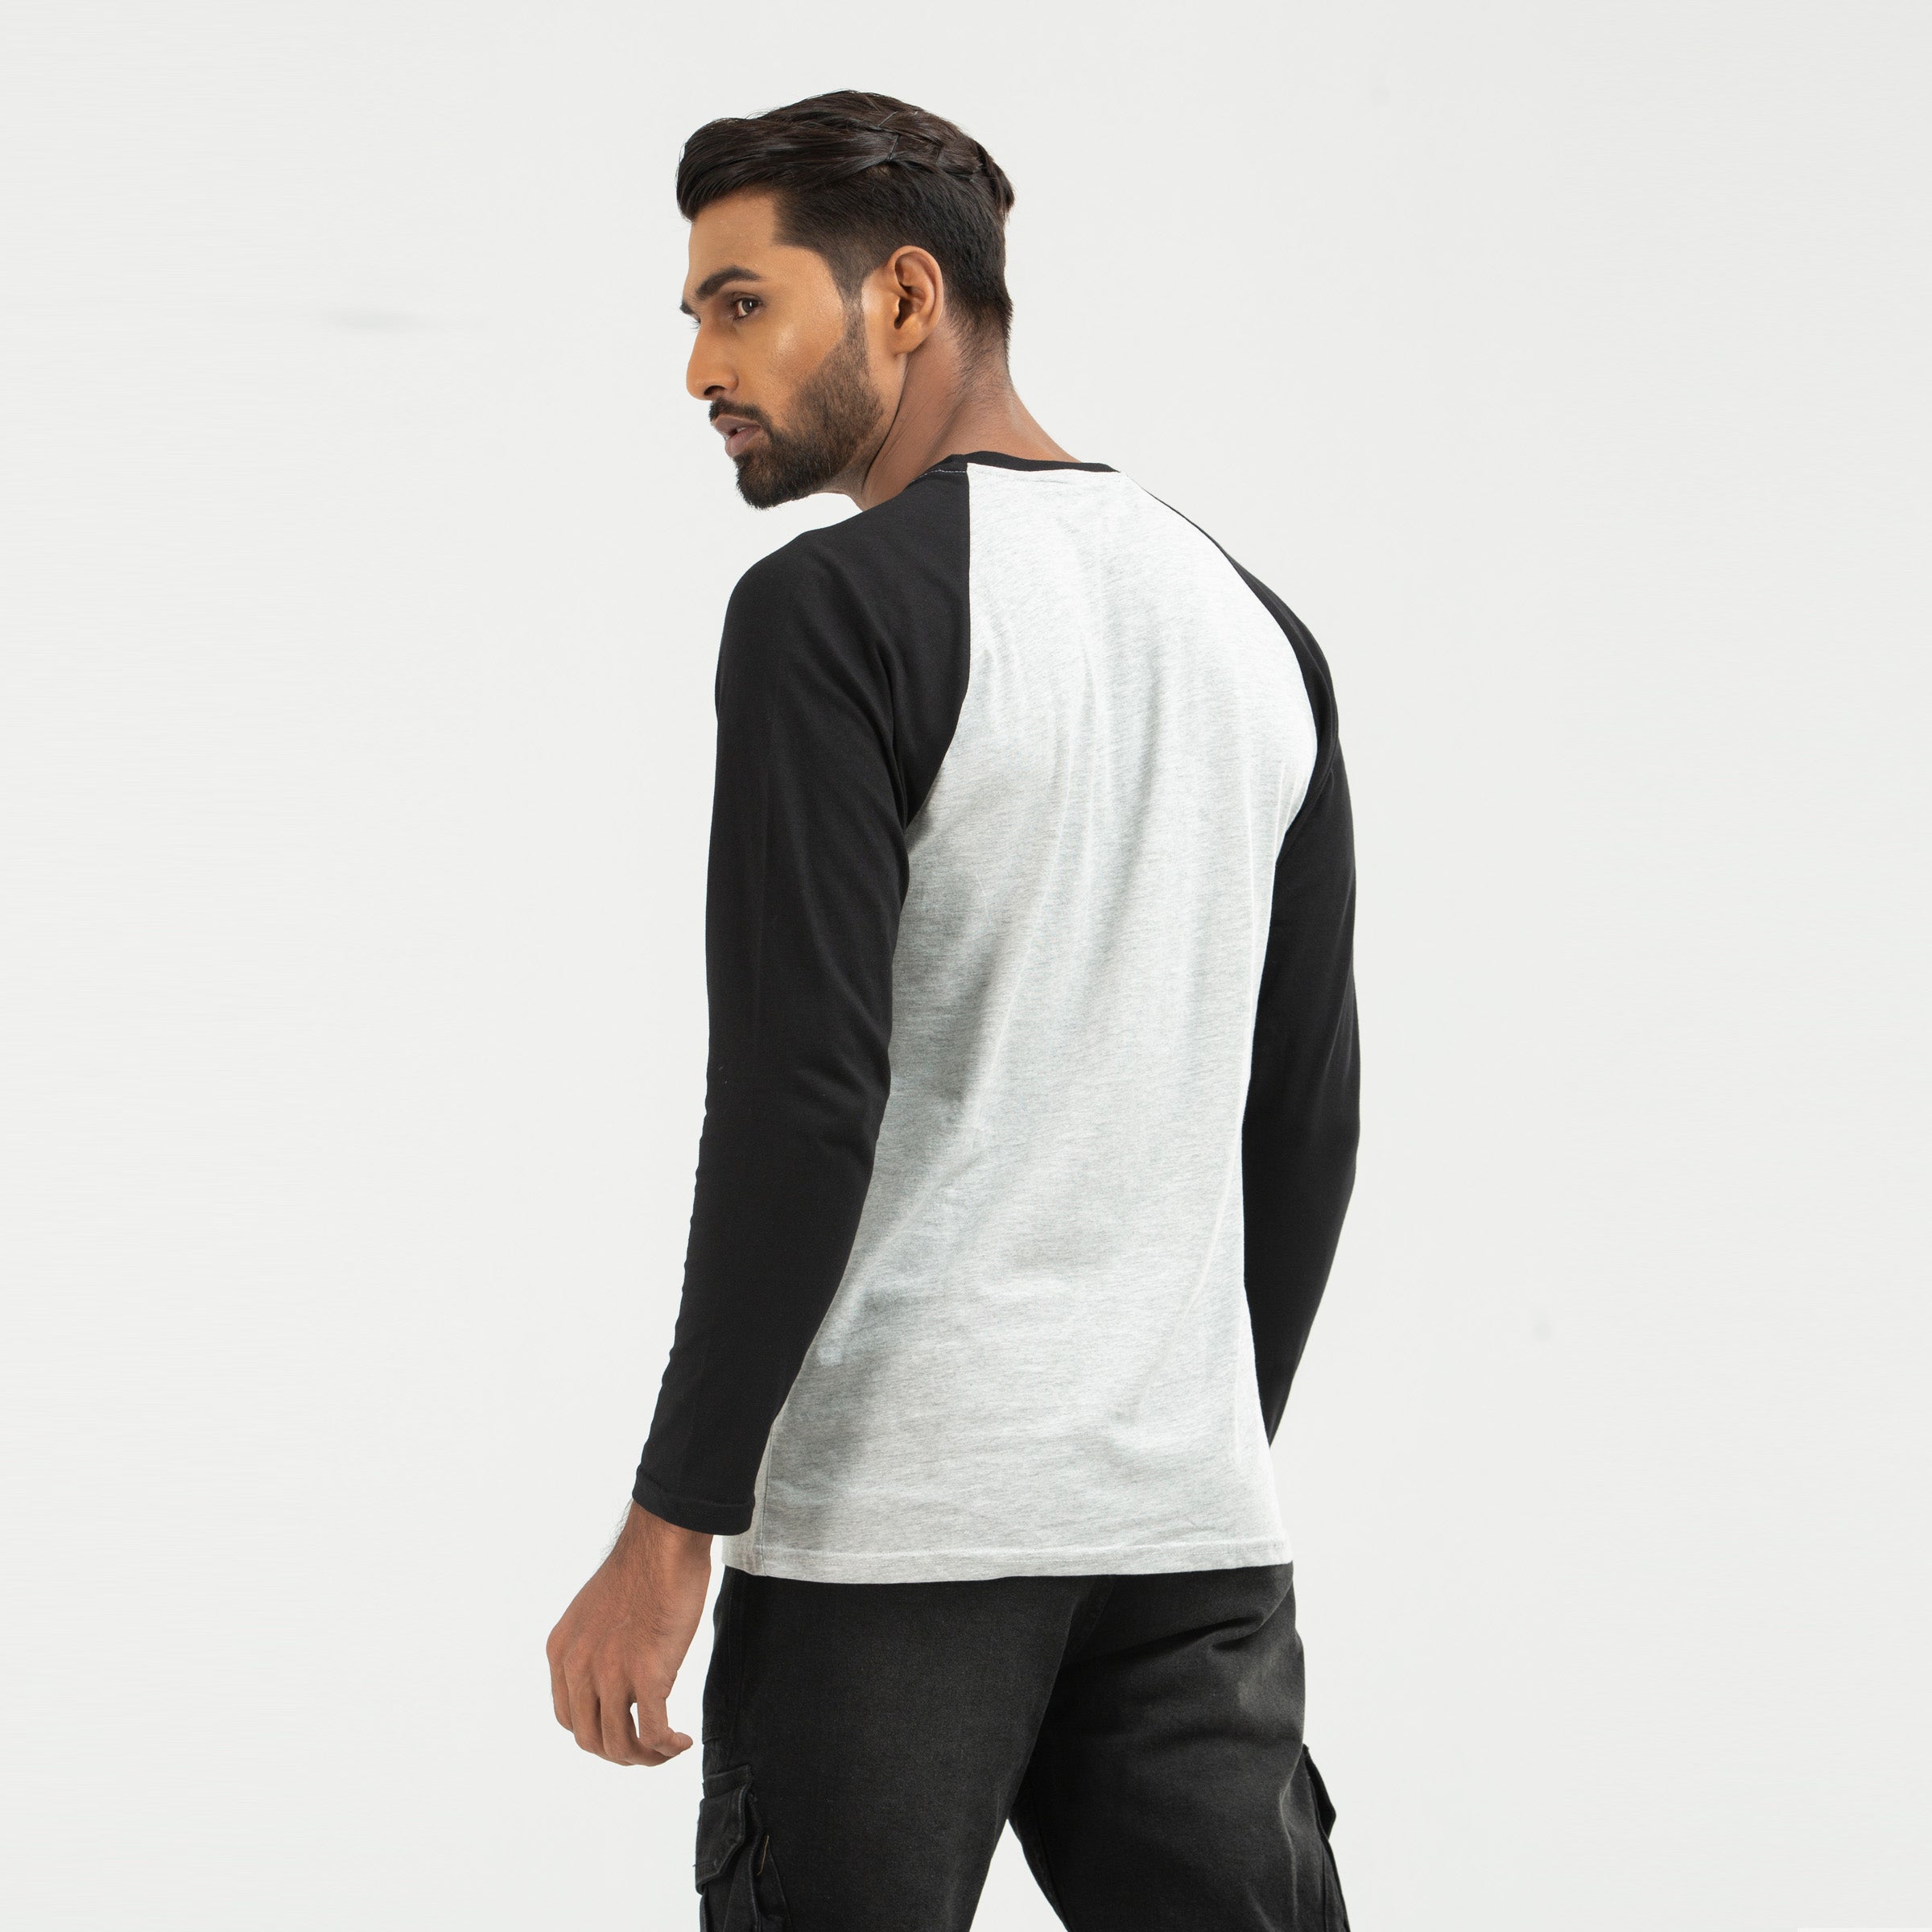 Raglan Long Sleeve T-shirt - grey & black